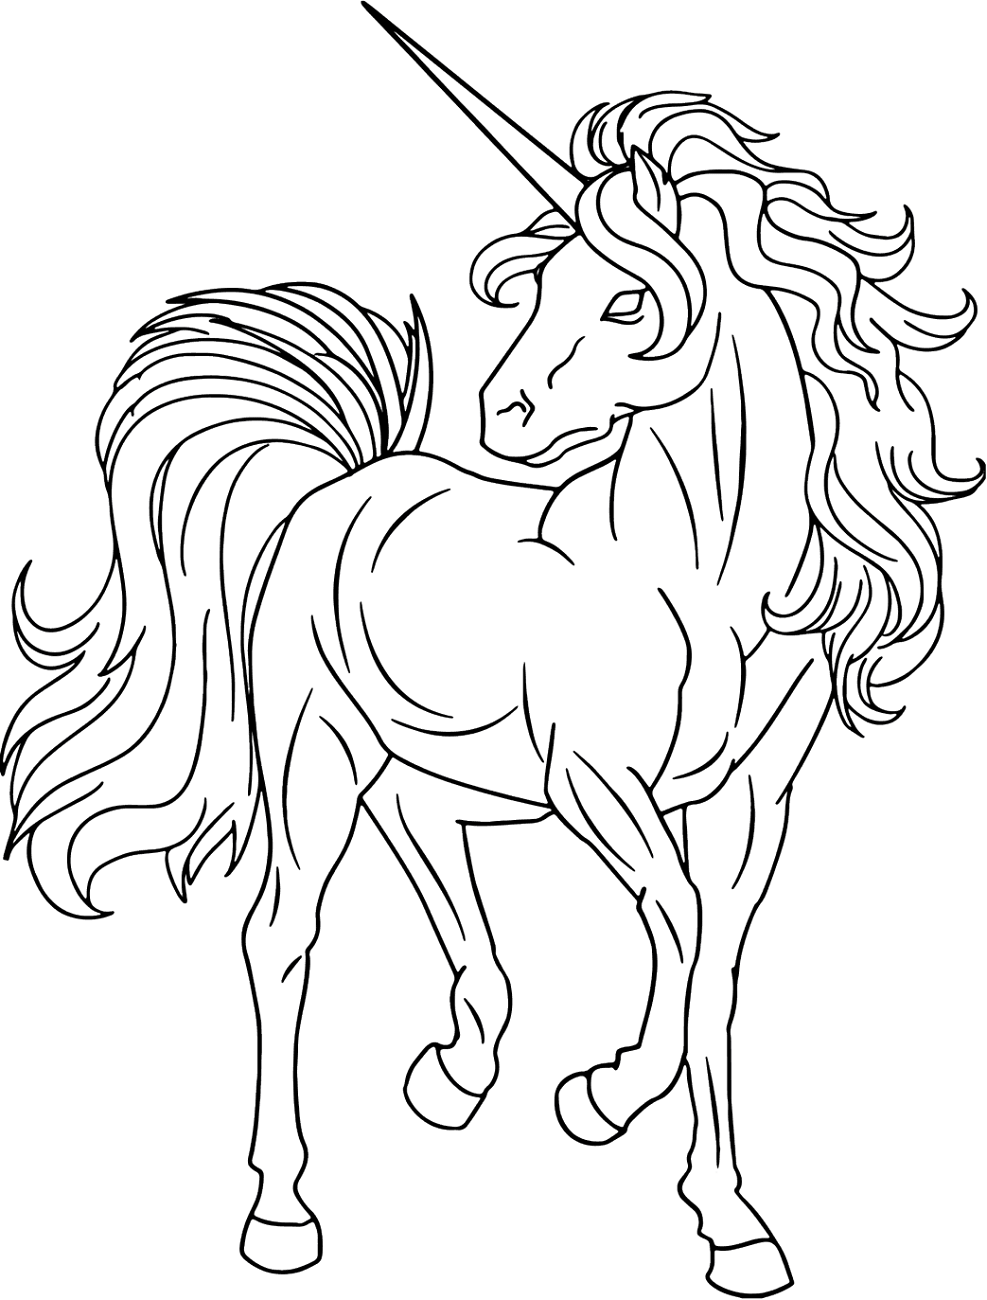 Dibujos de Impresionante Unicornio para colorear